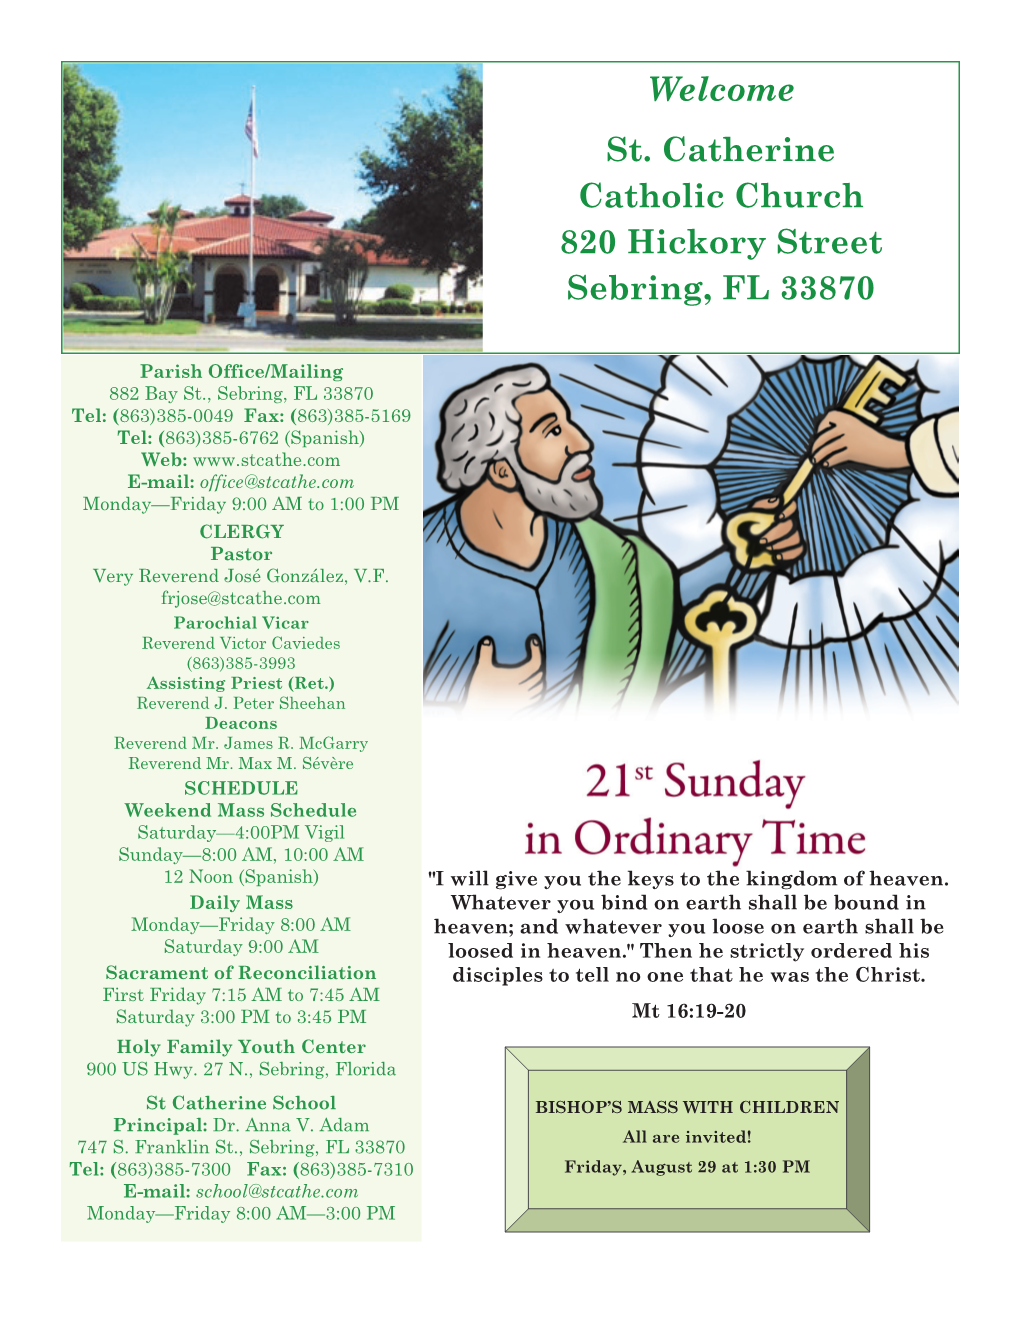 St. Catherine Catholic Church 820 Hickory Street Sebring, FL 33870